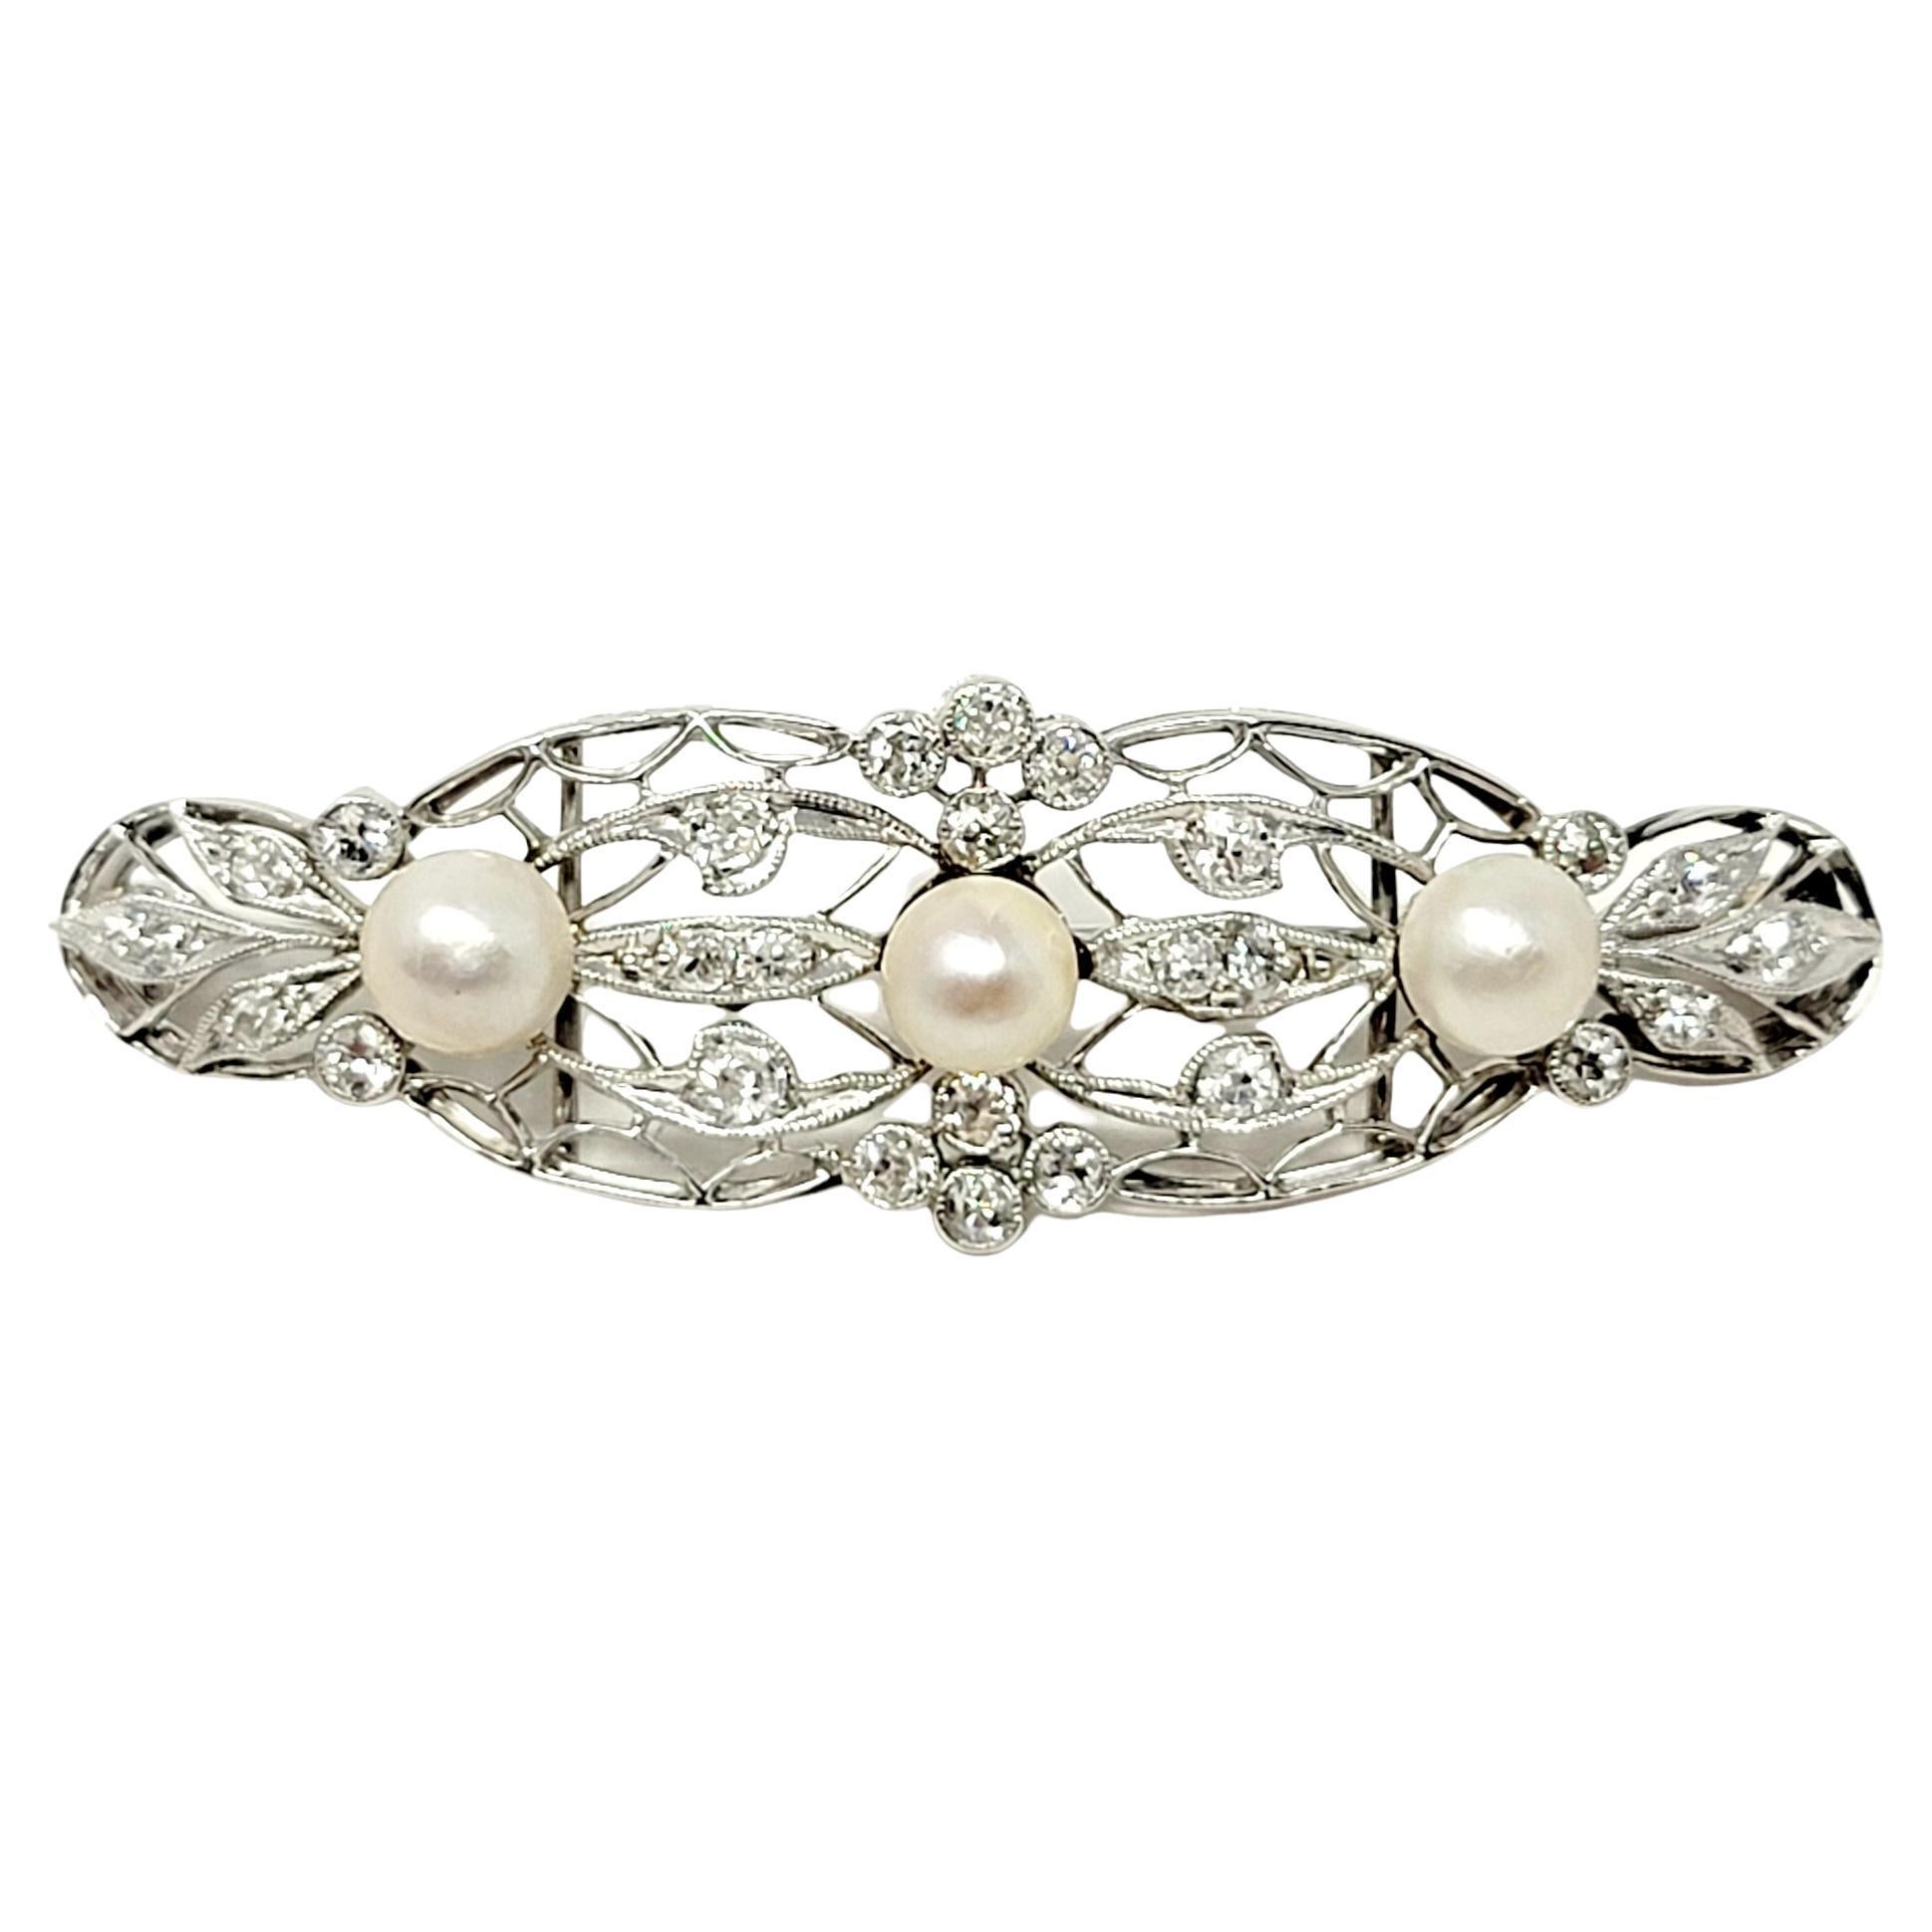 Vintage Edwardian Style Diamond and Pearl Filigree Brooch 14 Karat White Gold